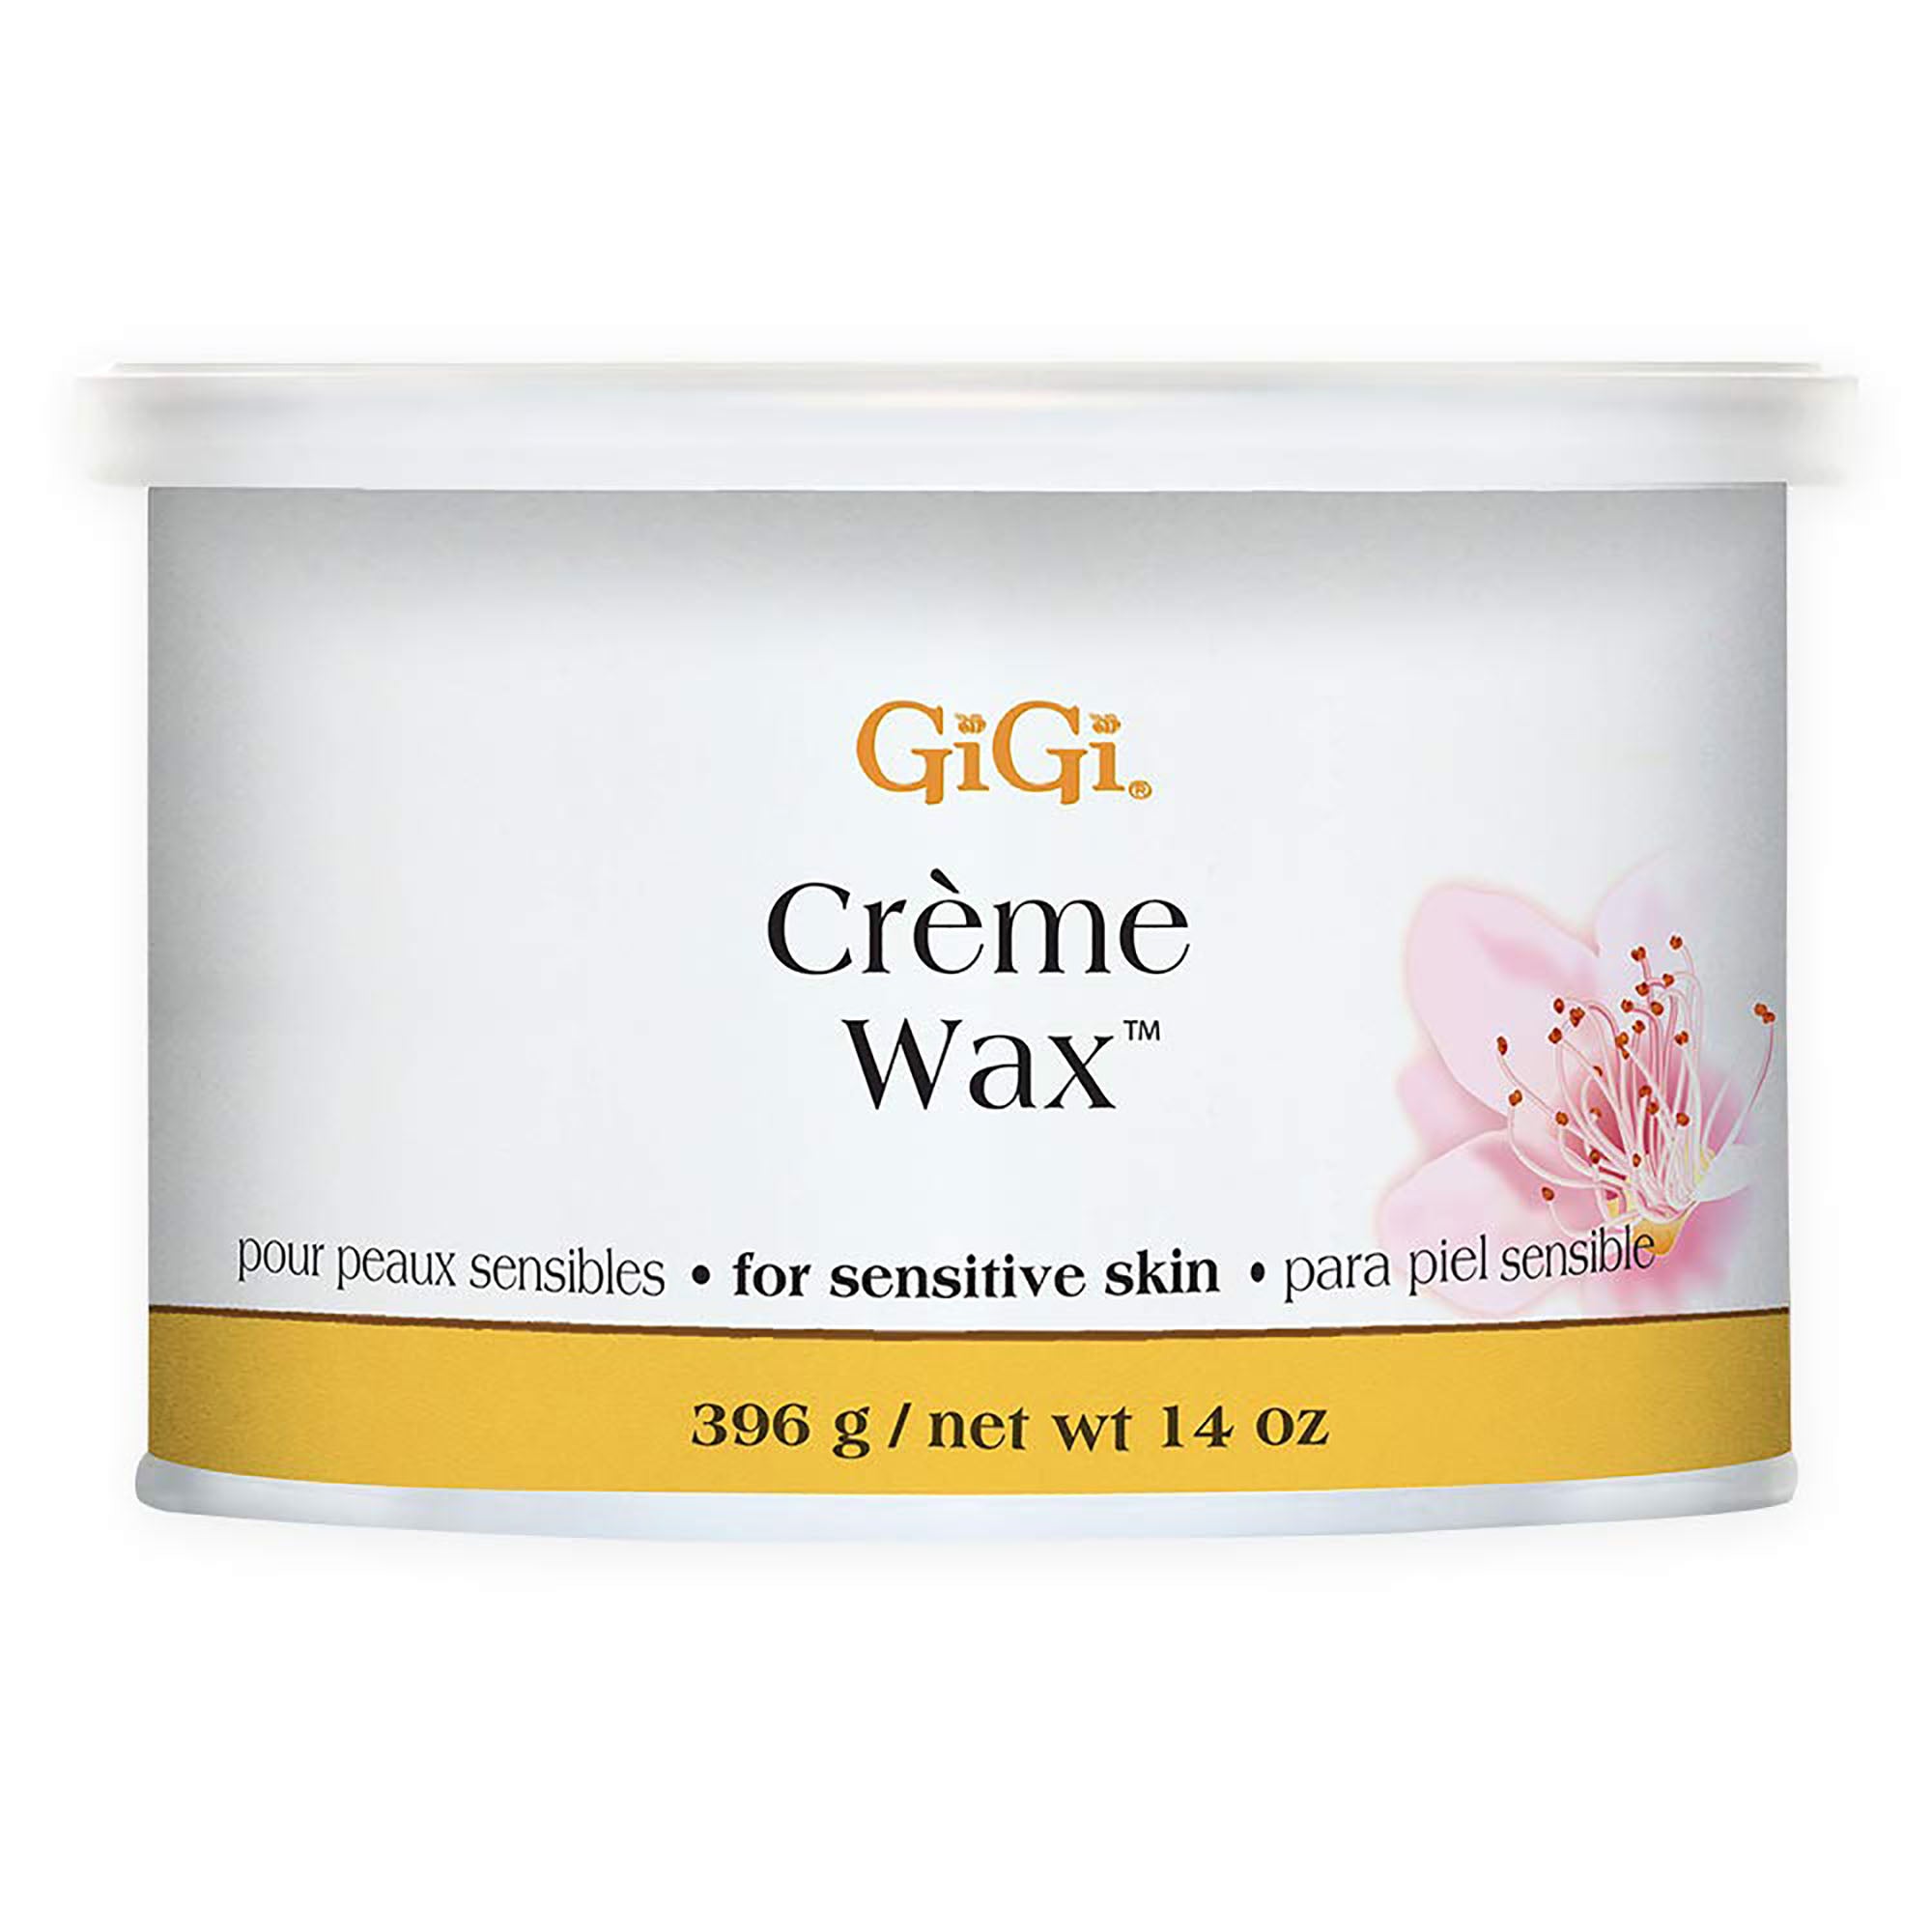 Gigi Creme Wax / 14.OZ